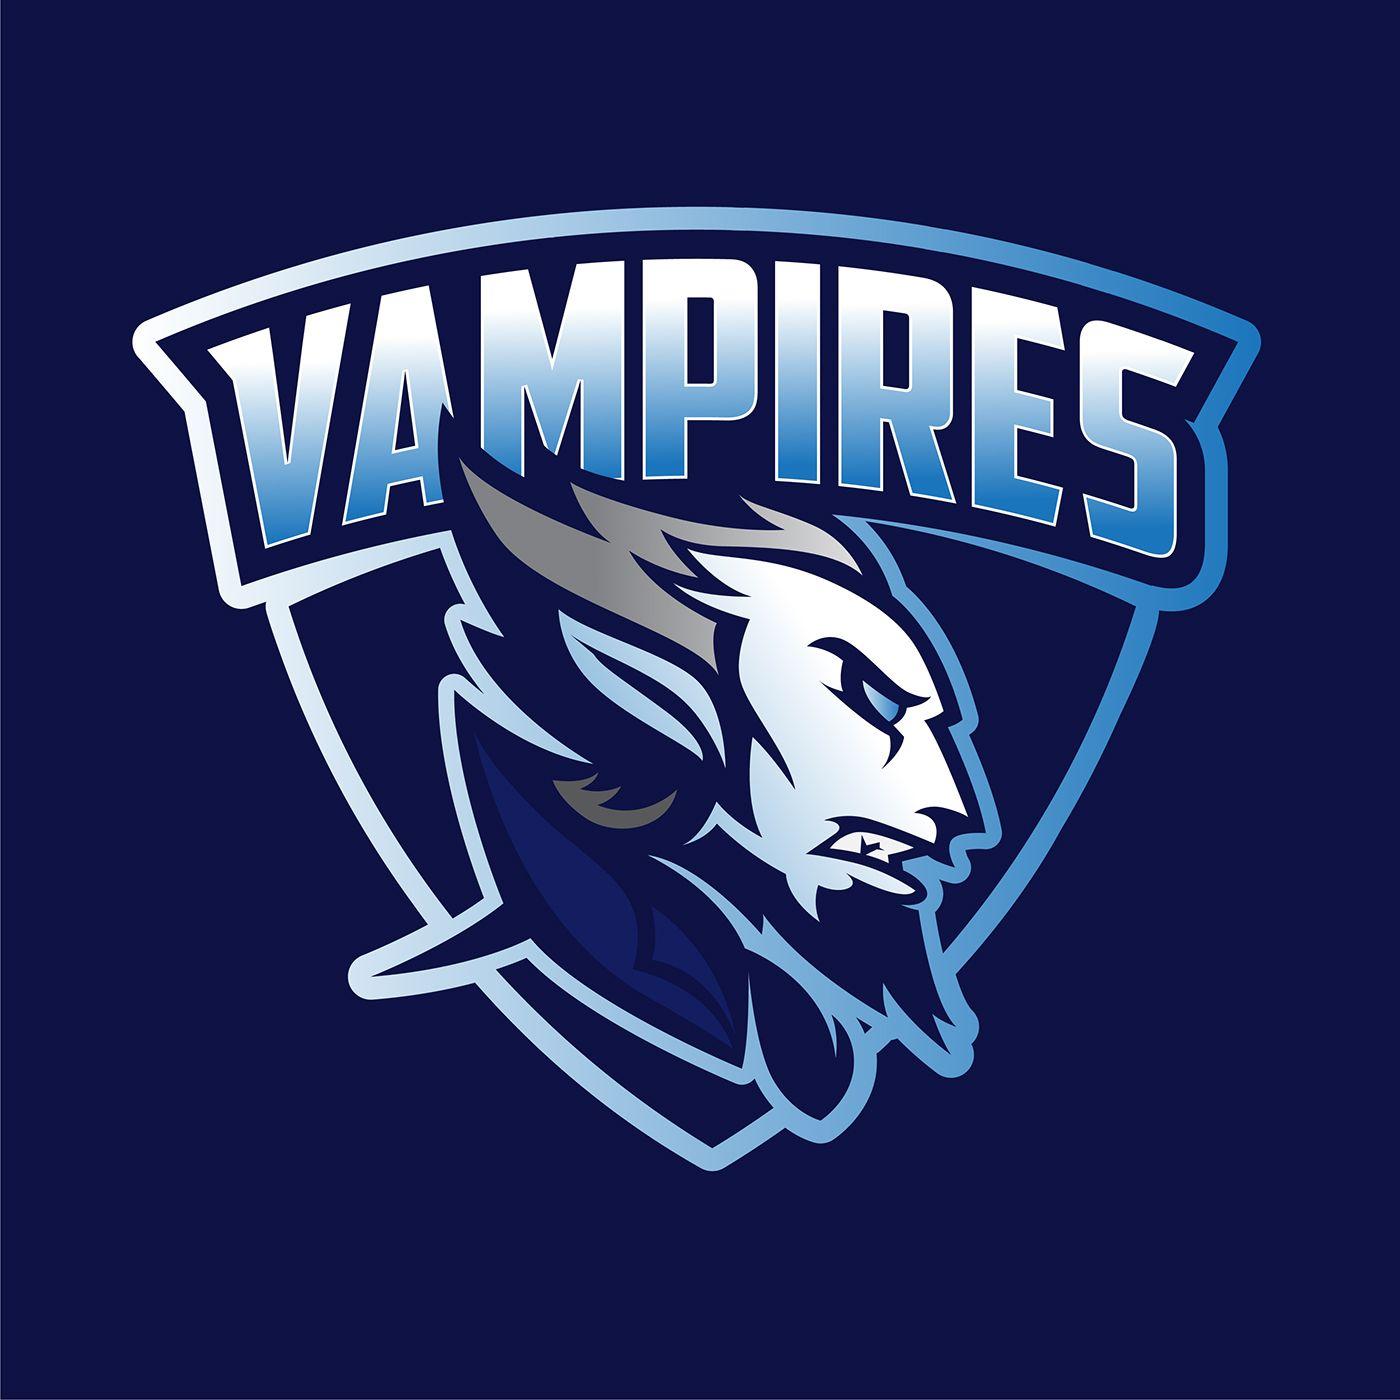 Vampire Logo - Vampires. Logo concept